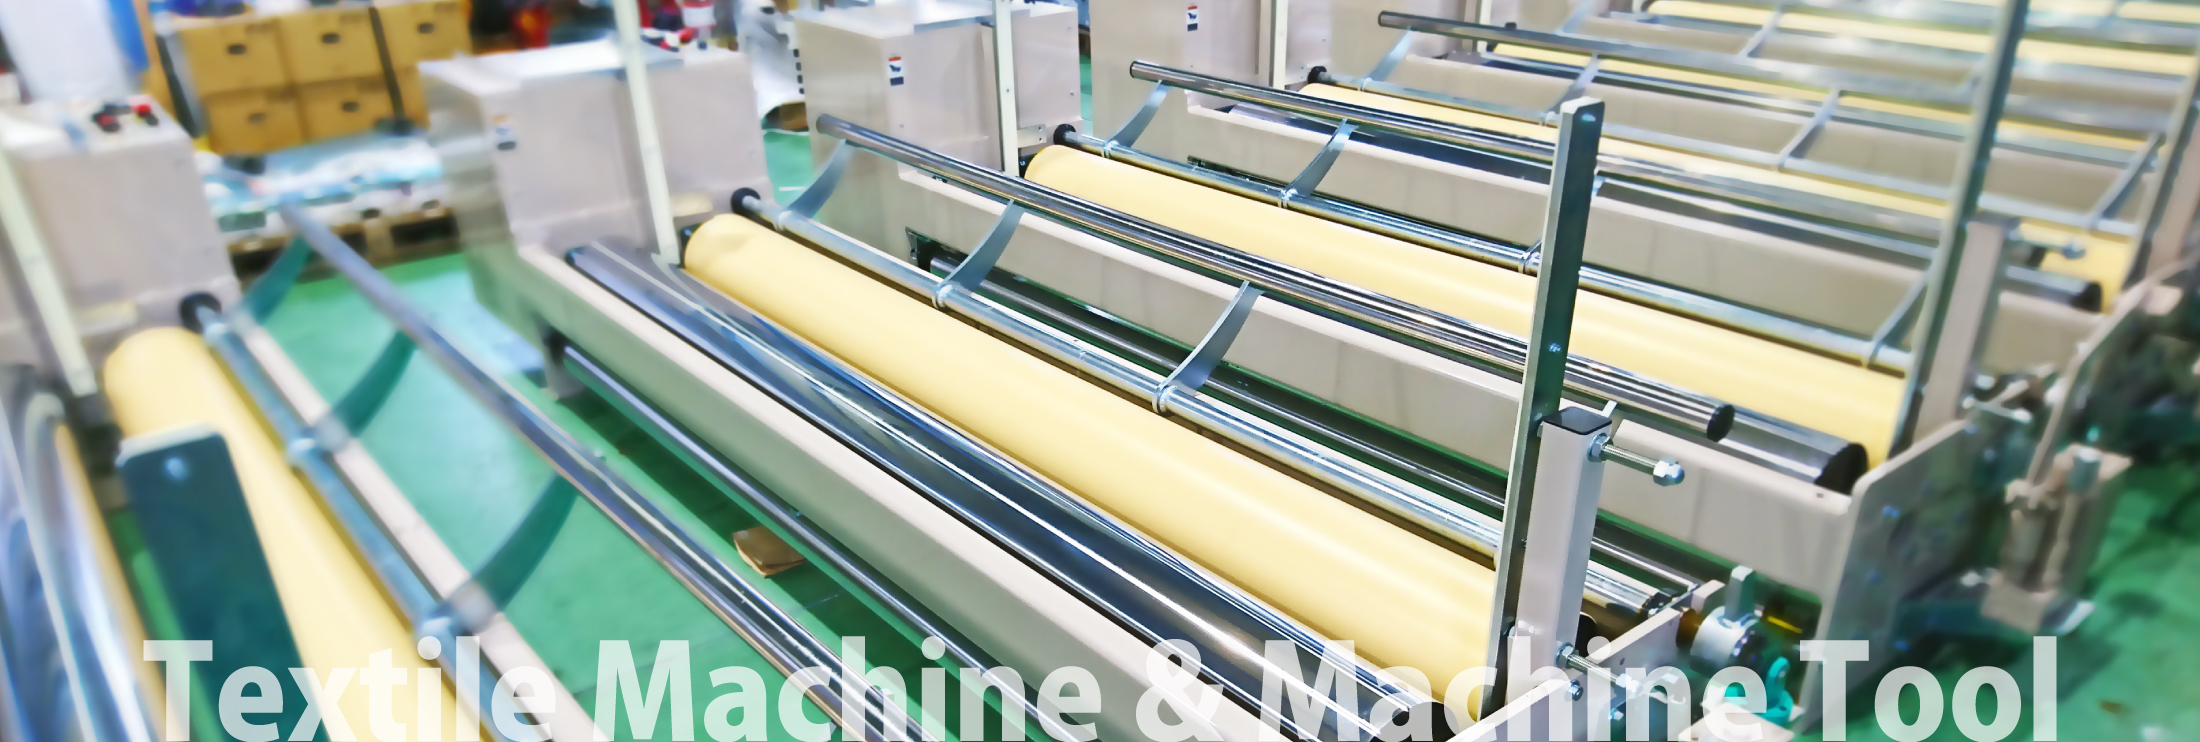 Textile Machine & Machine Tool